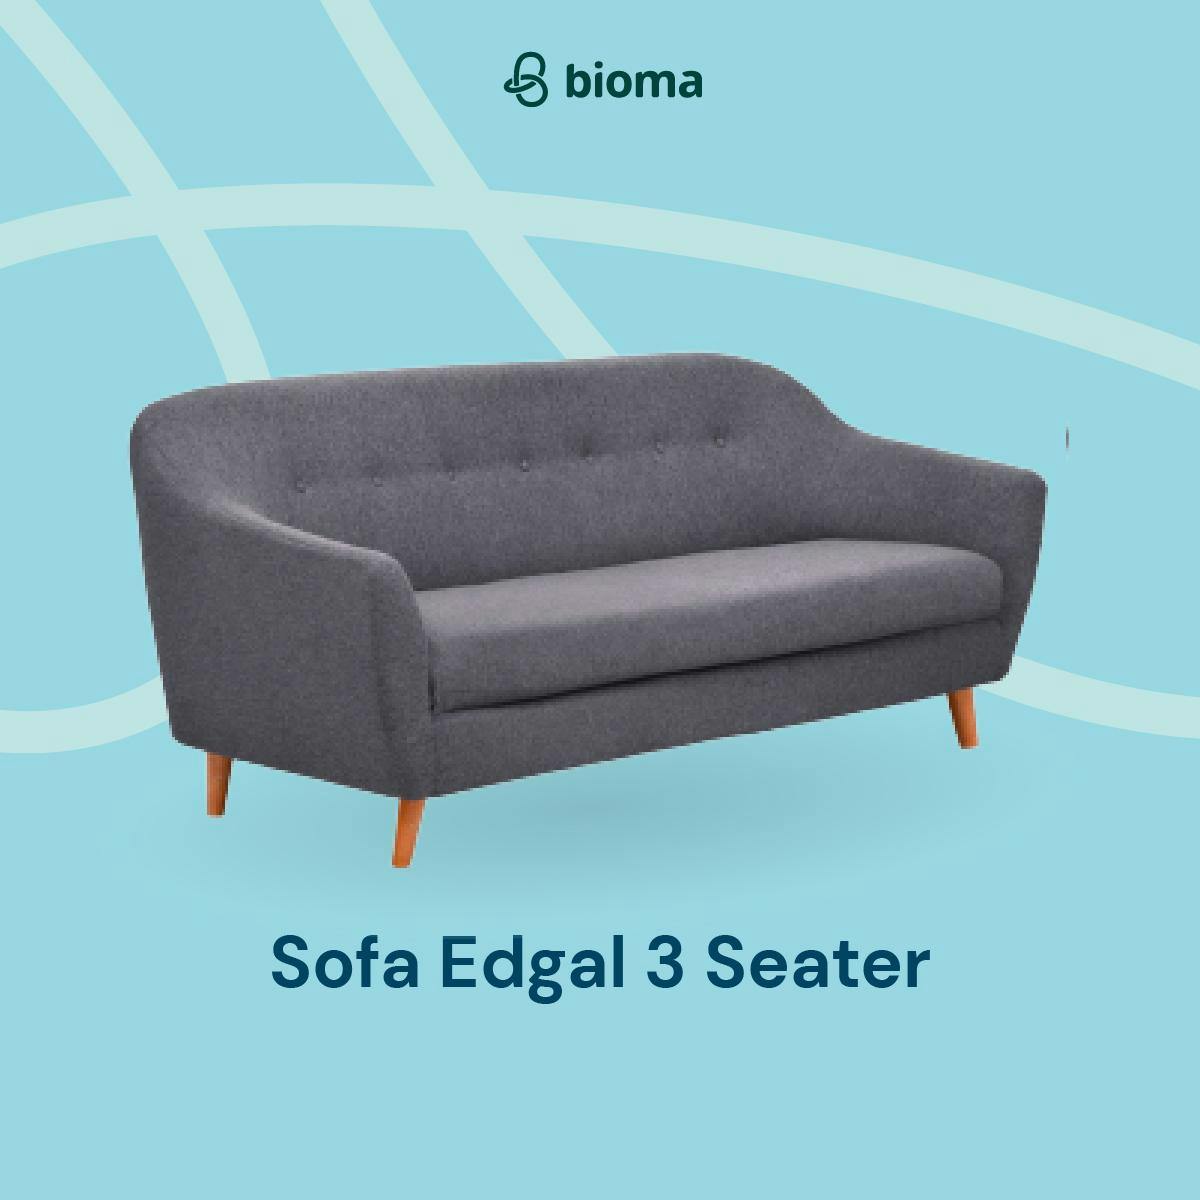 Sofa Edgal 3 Seater